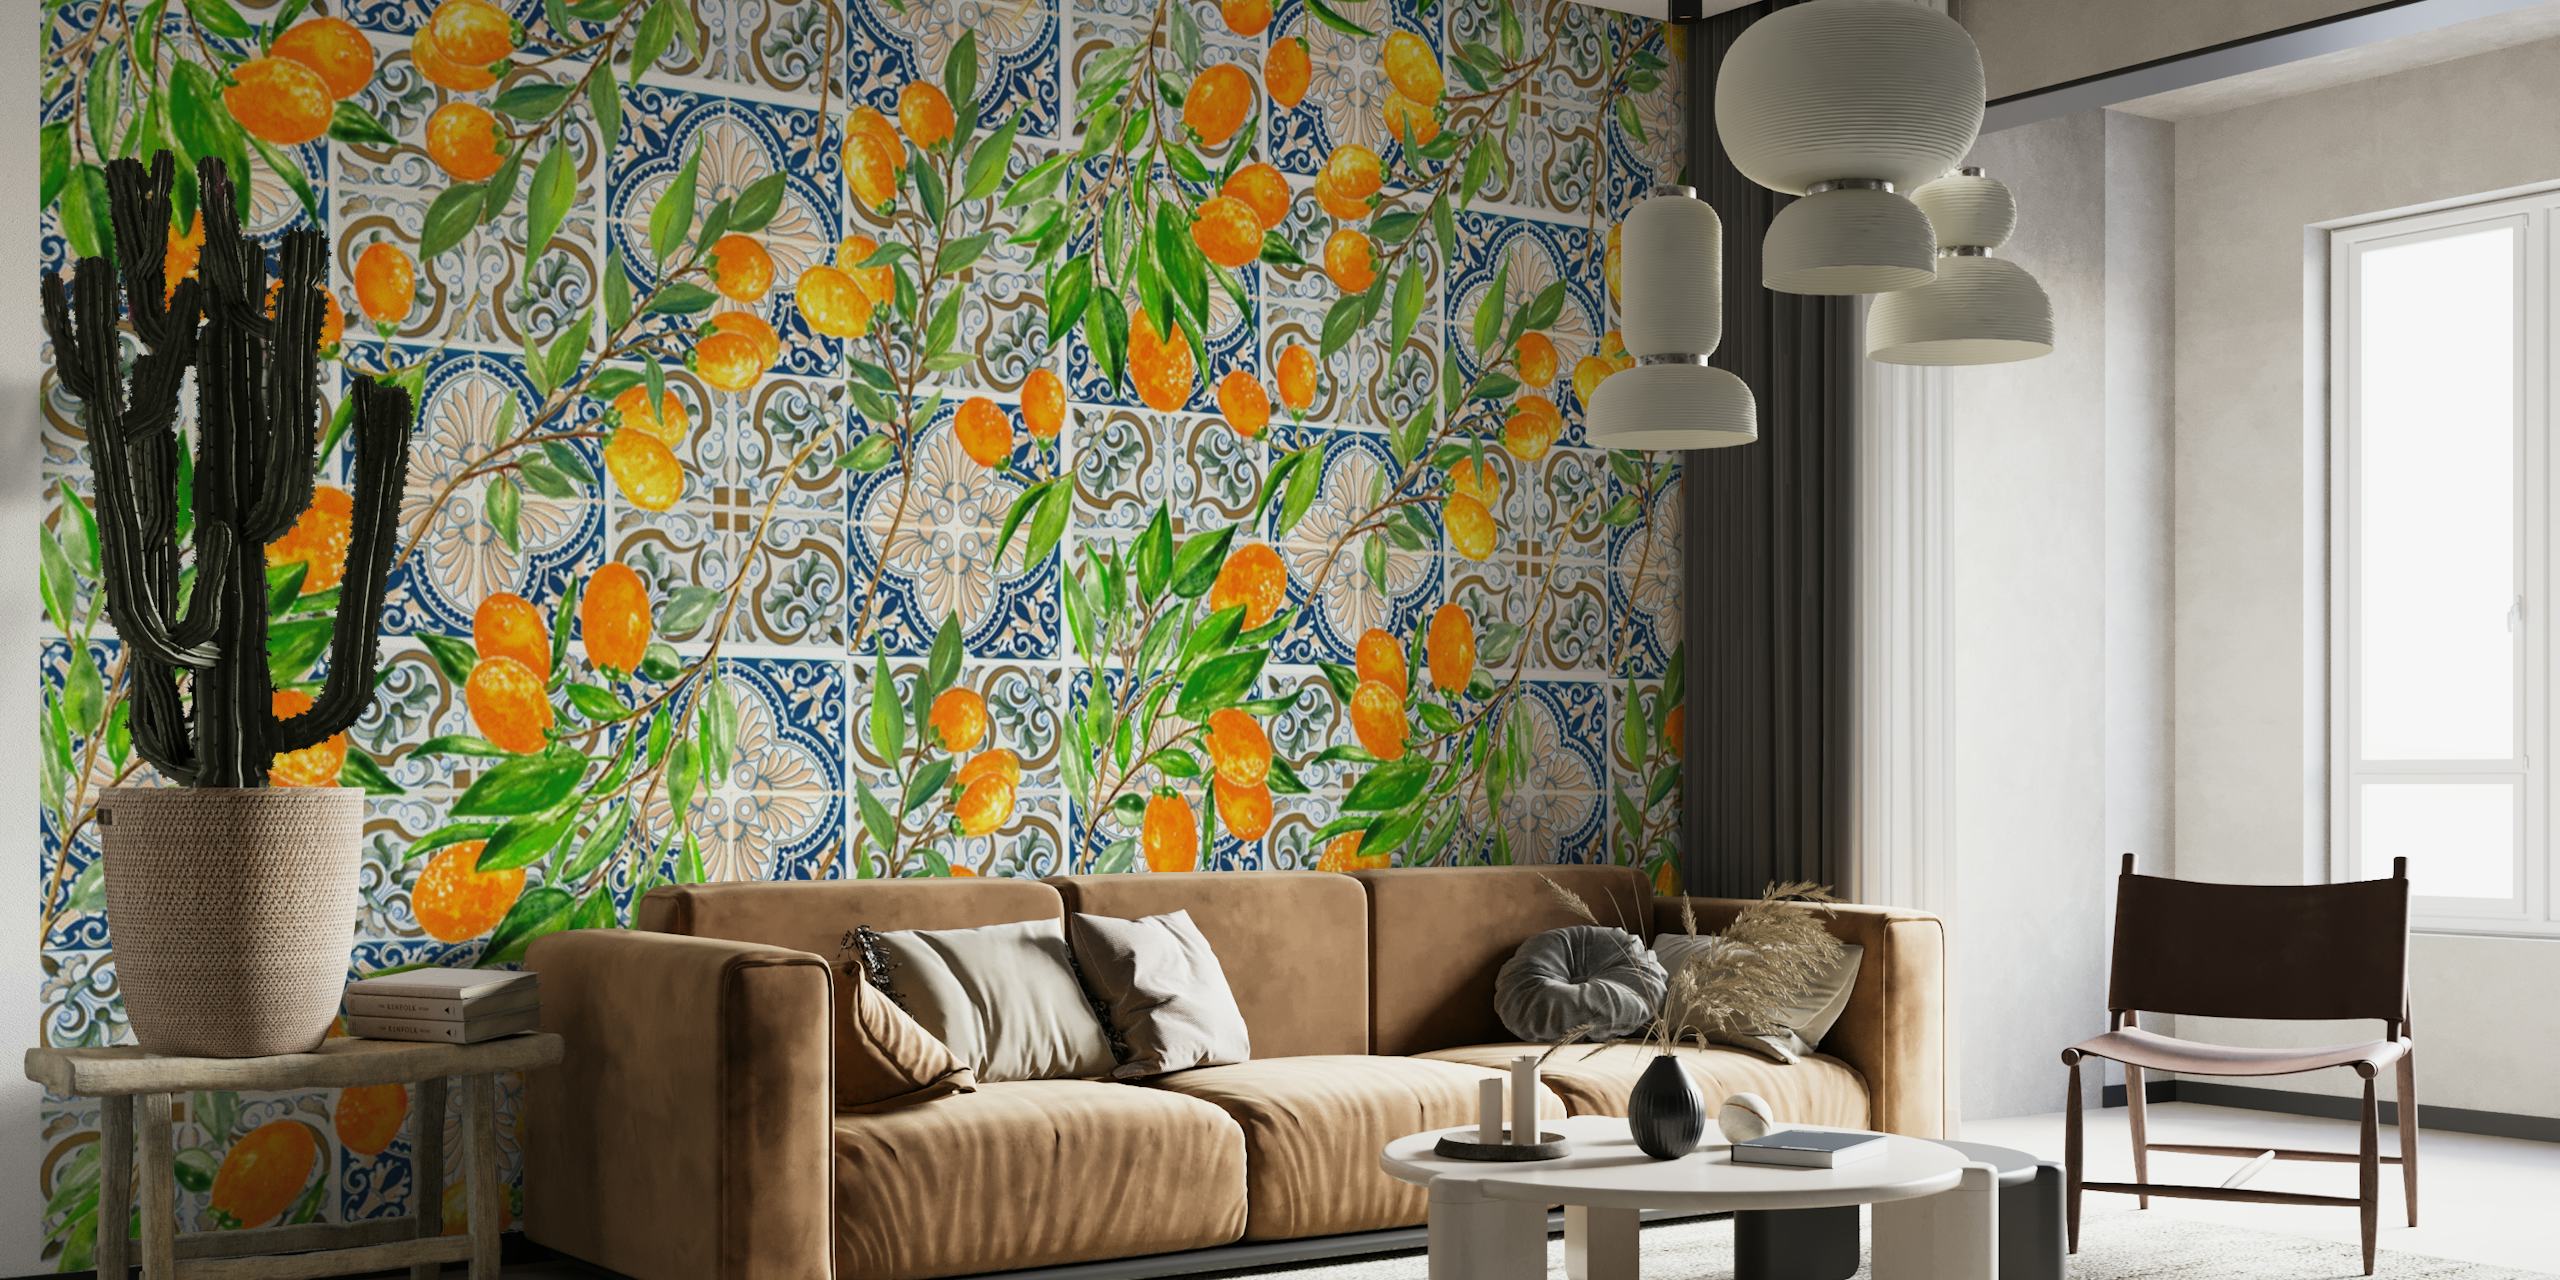 Mediterranean Cumquat Tiles wallpaper